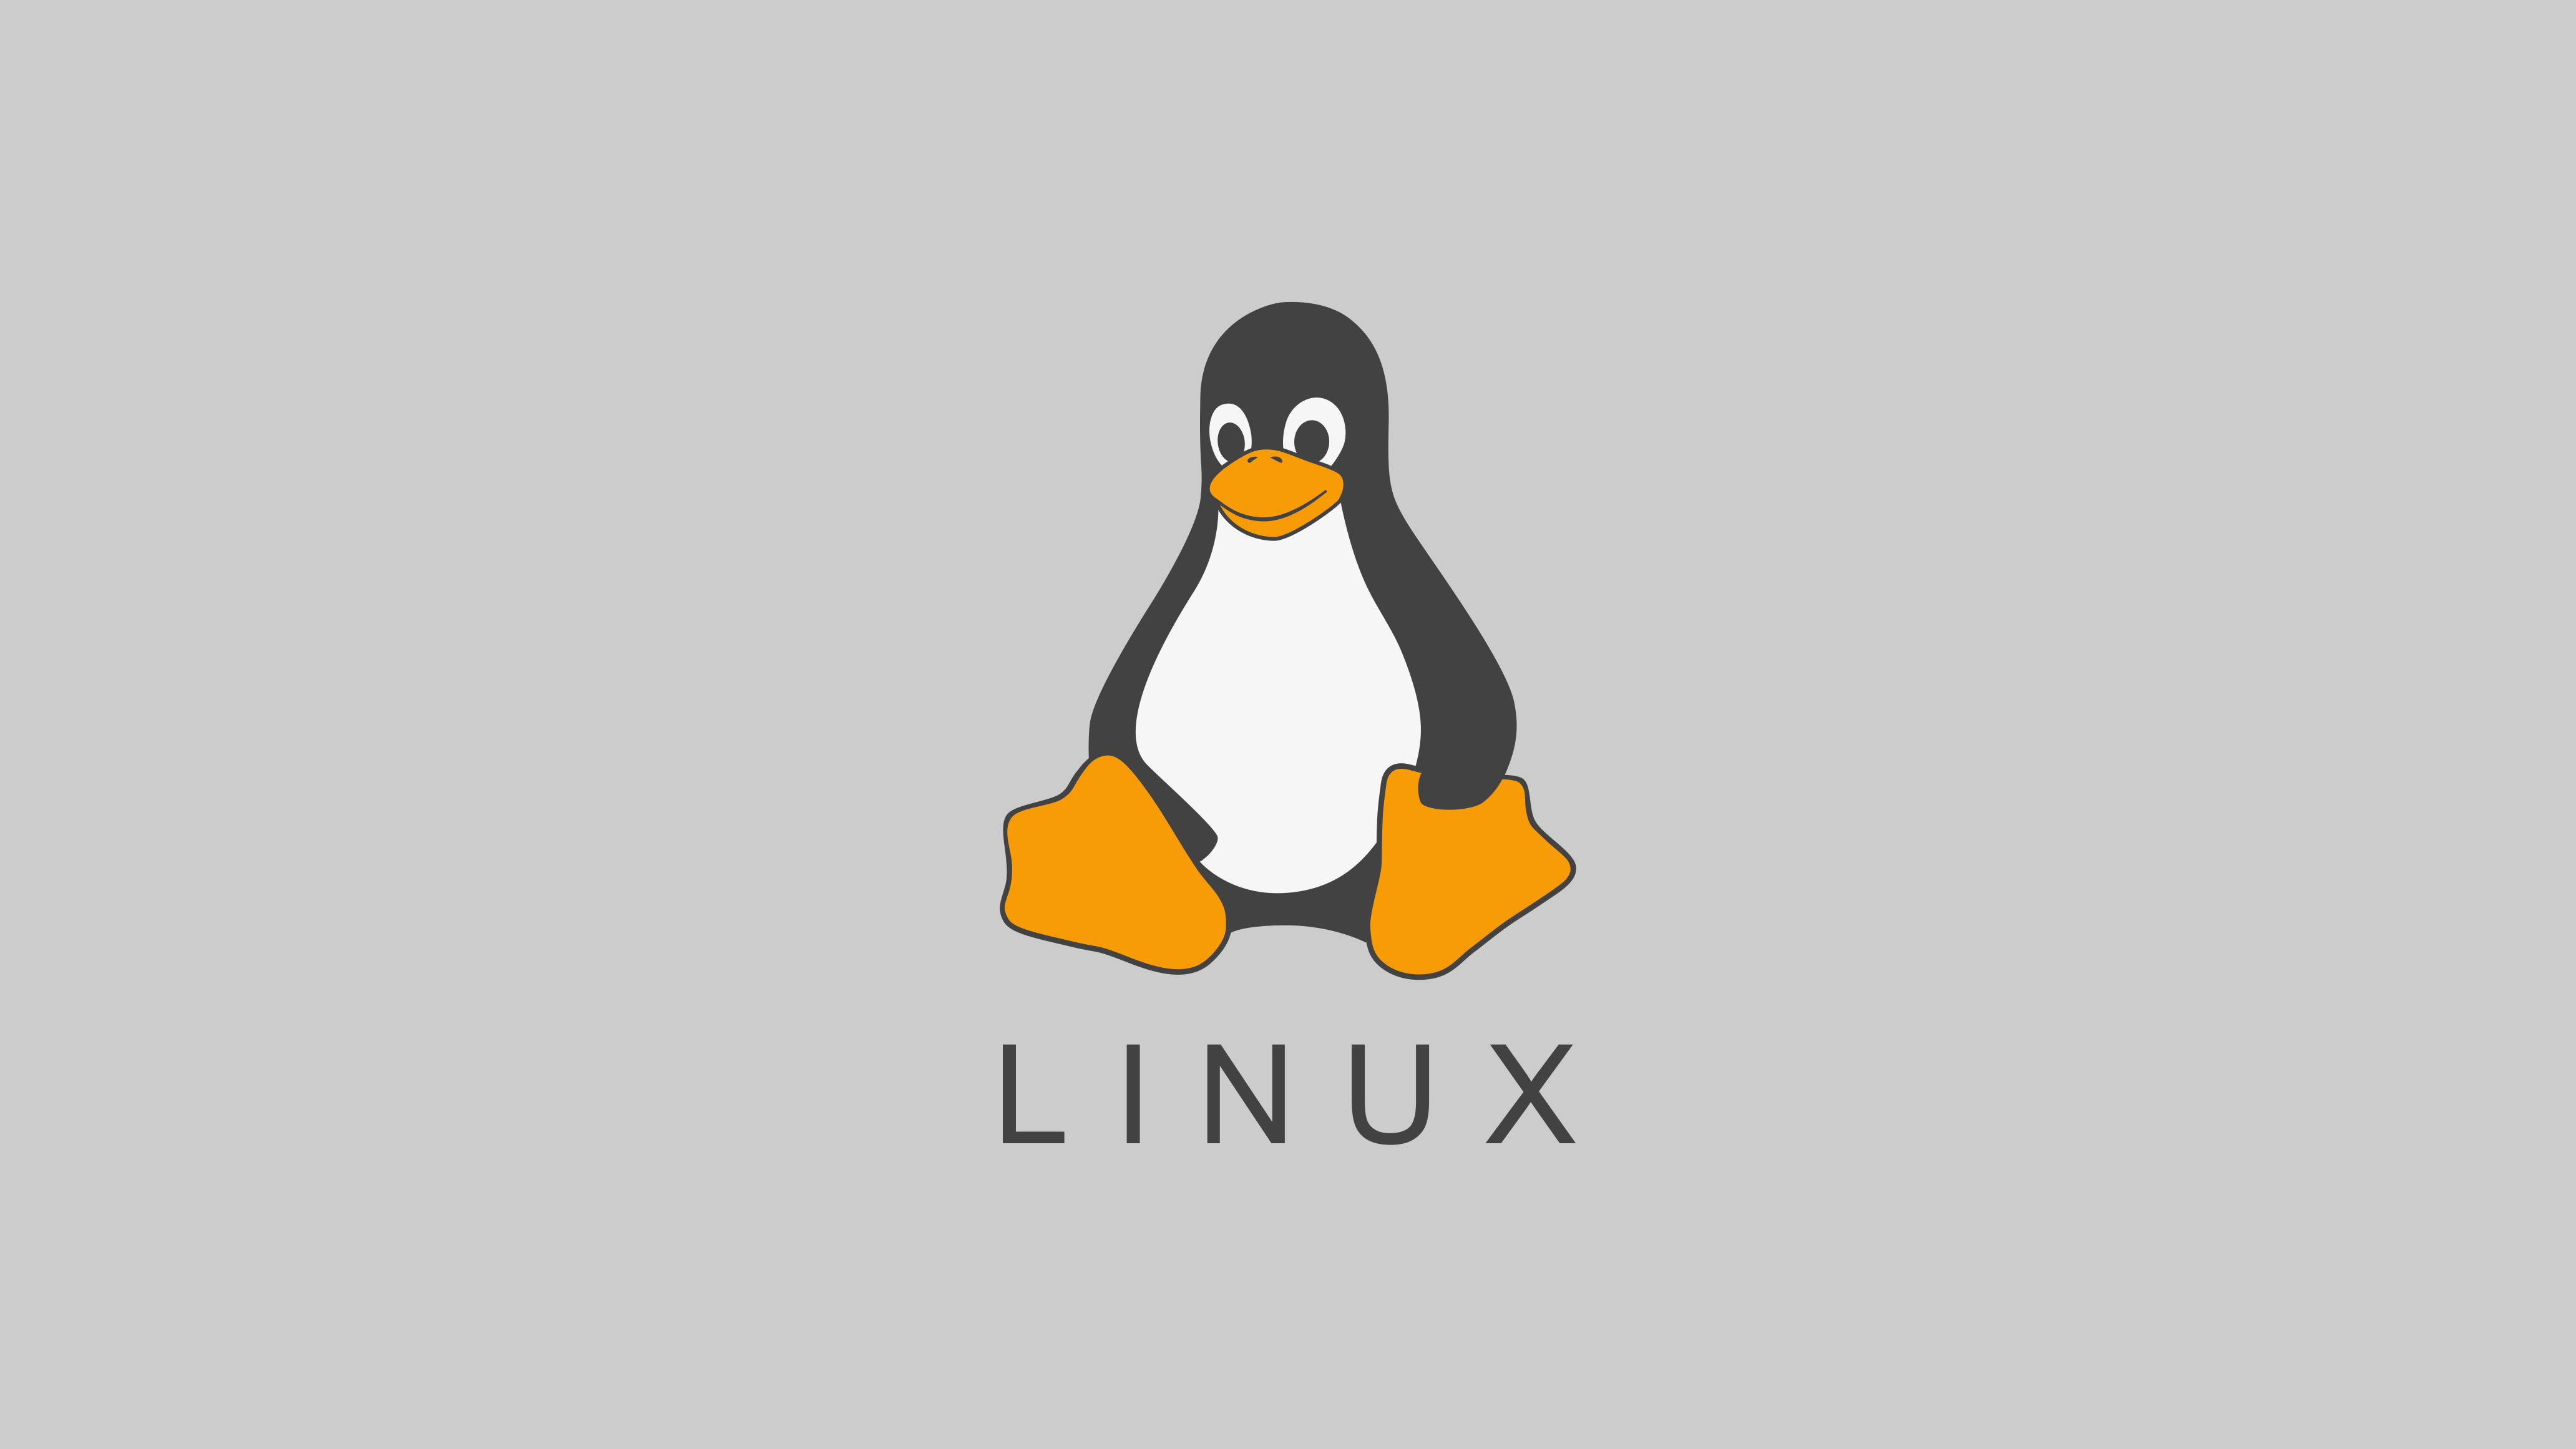 General 4128x2322 Linux minimalism FoxyRiot Tux operating system foss simple background digital art text